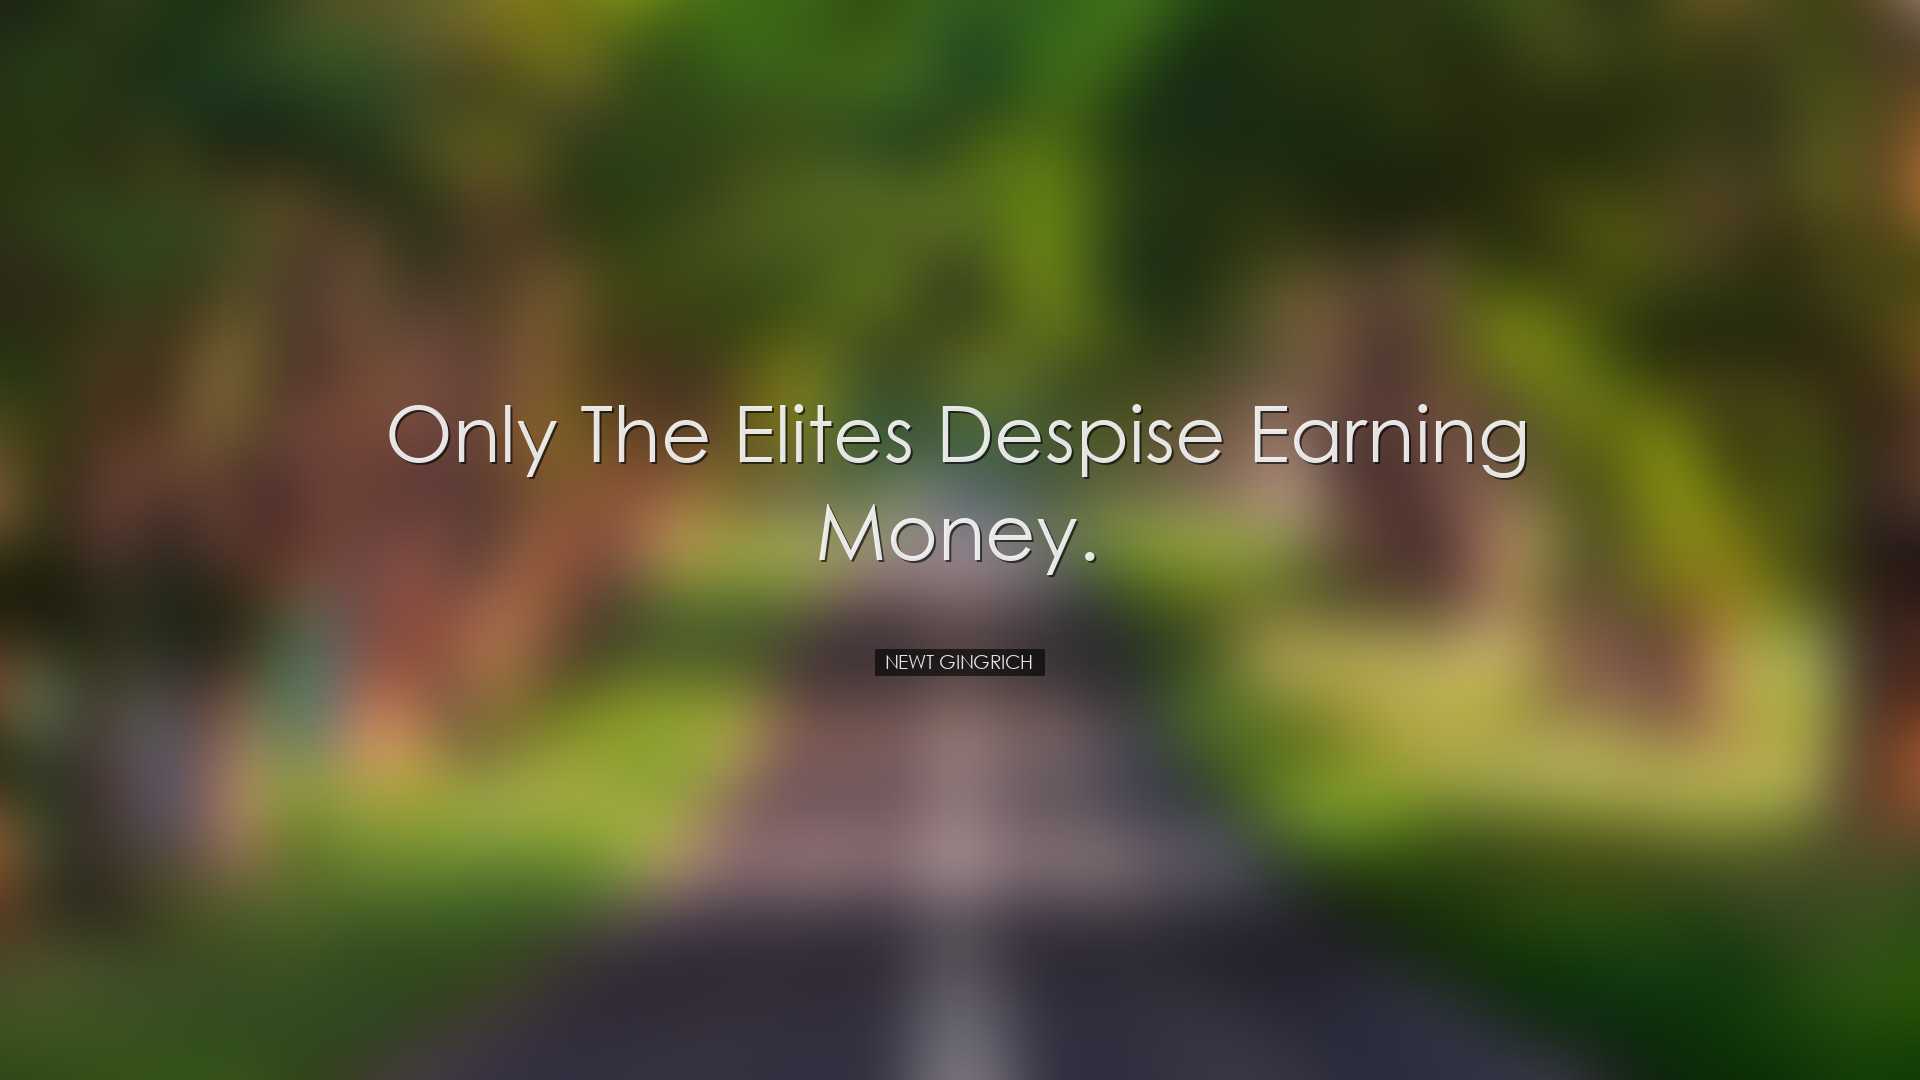 Only the elites despise earning money. - Newt Gingrich